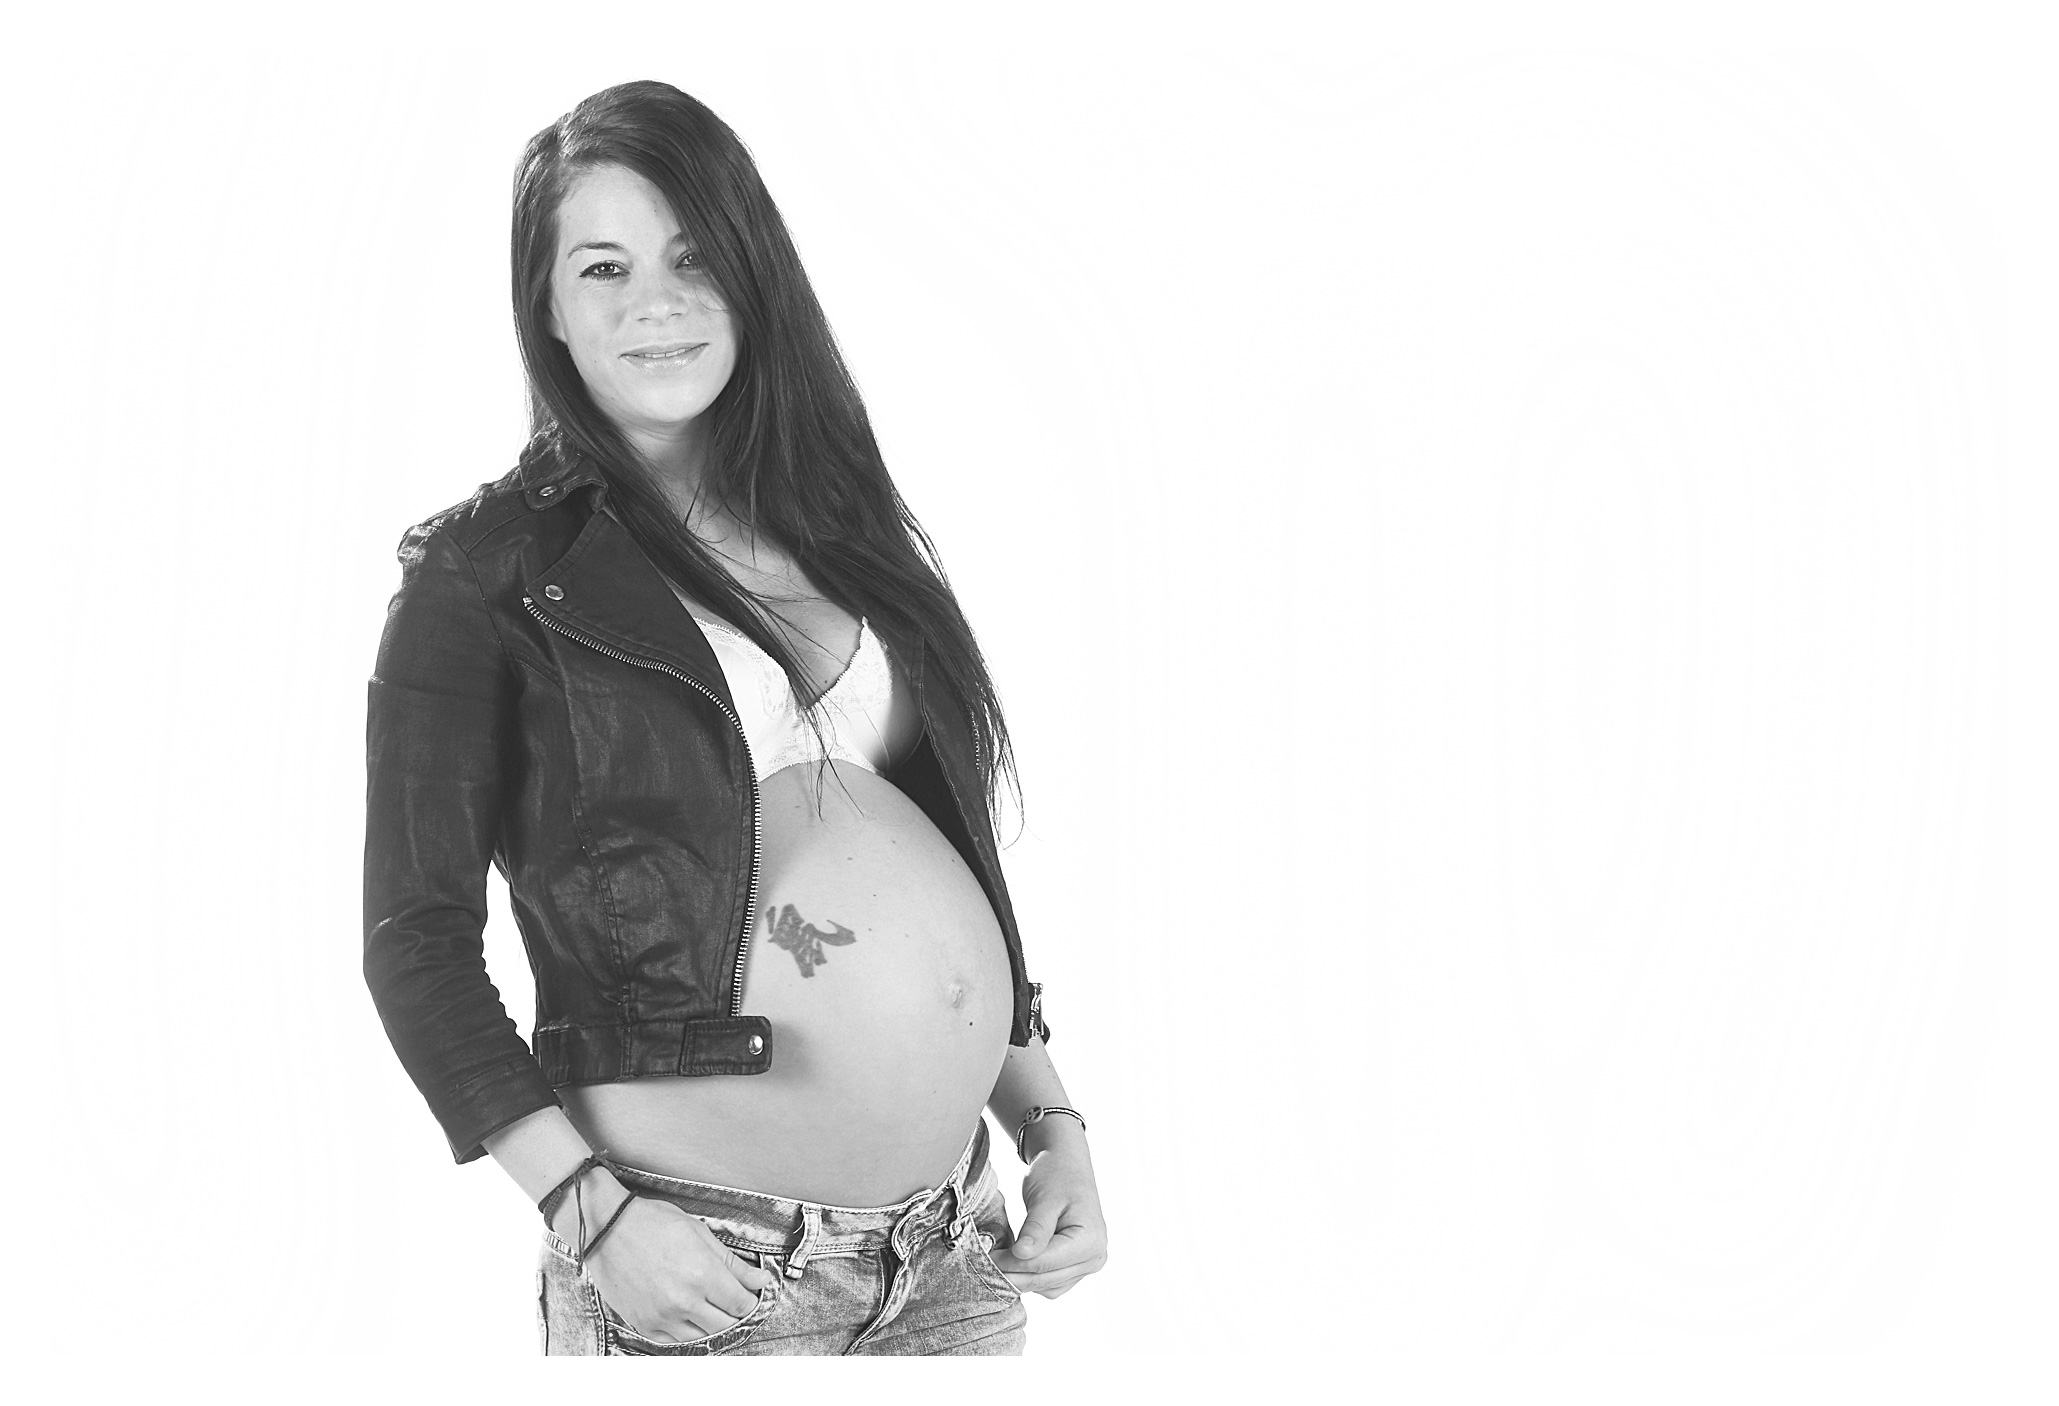 zwangerschap fotoshoot buikfoto newborn shoot